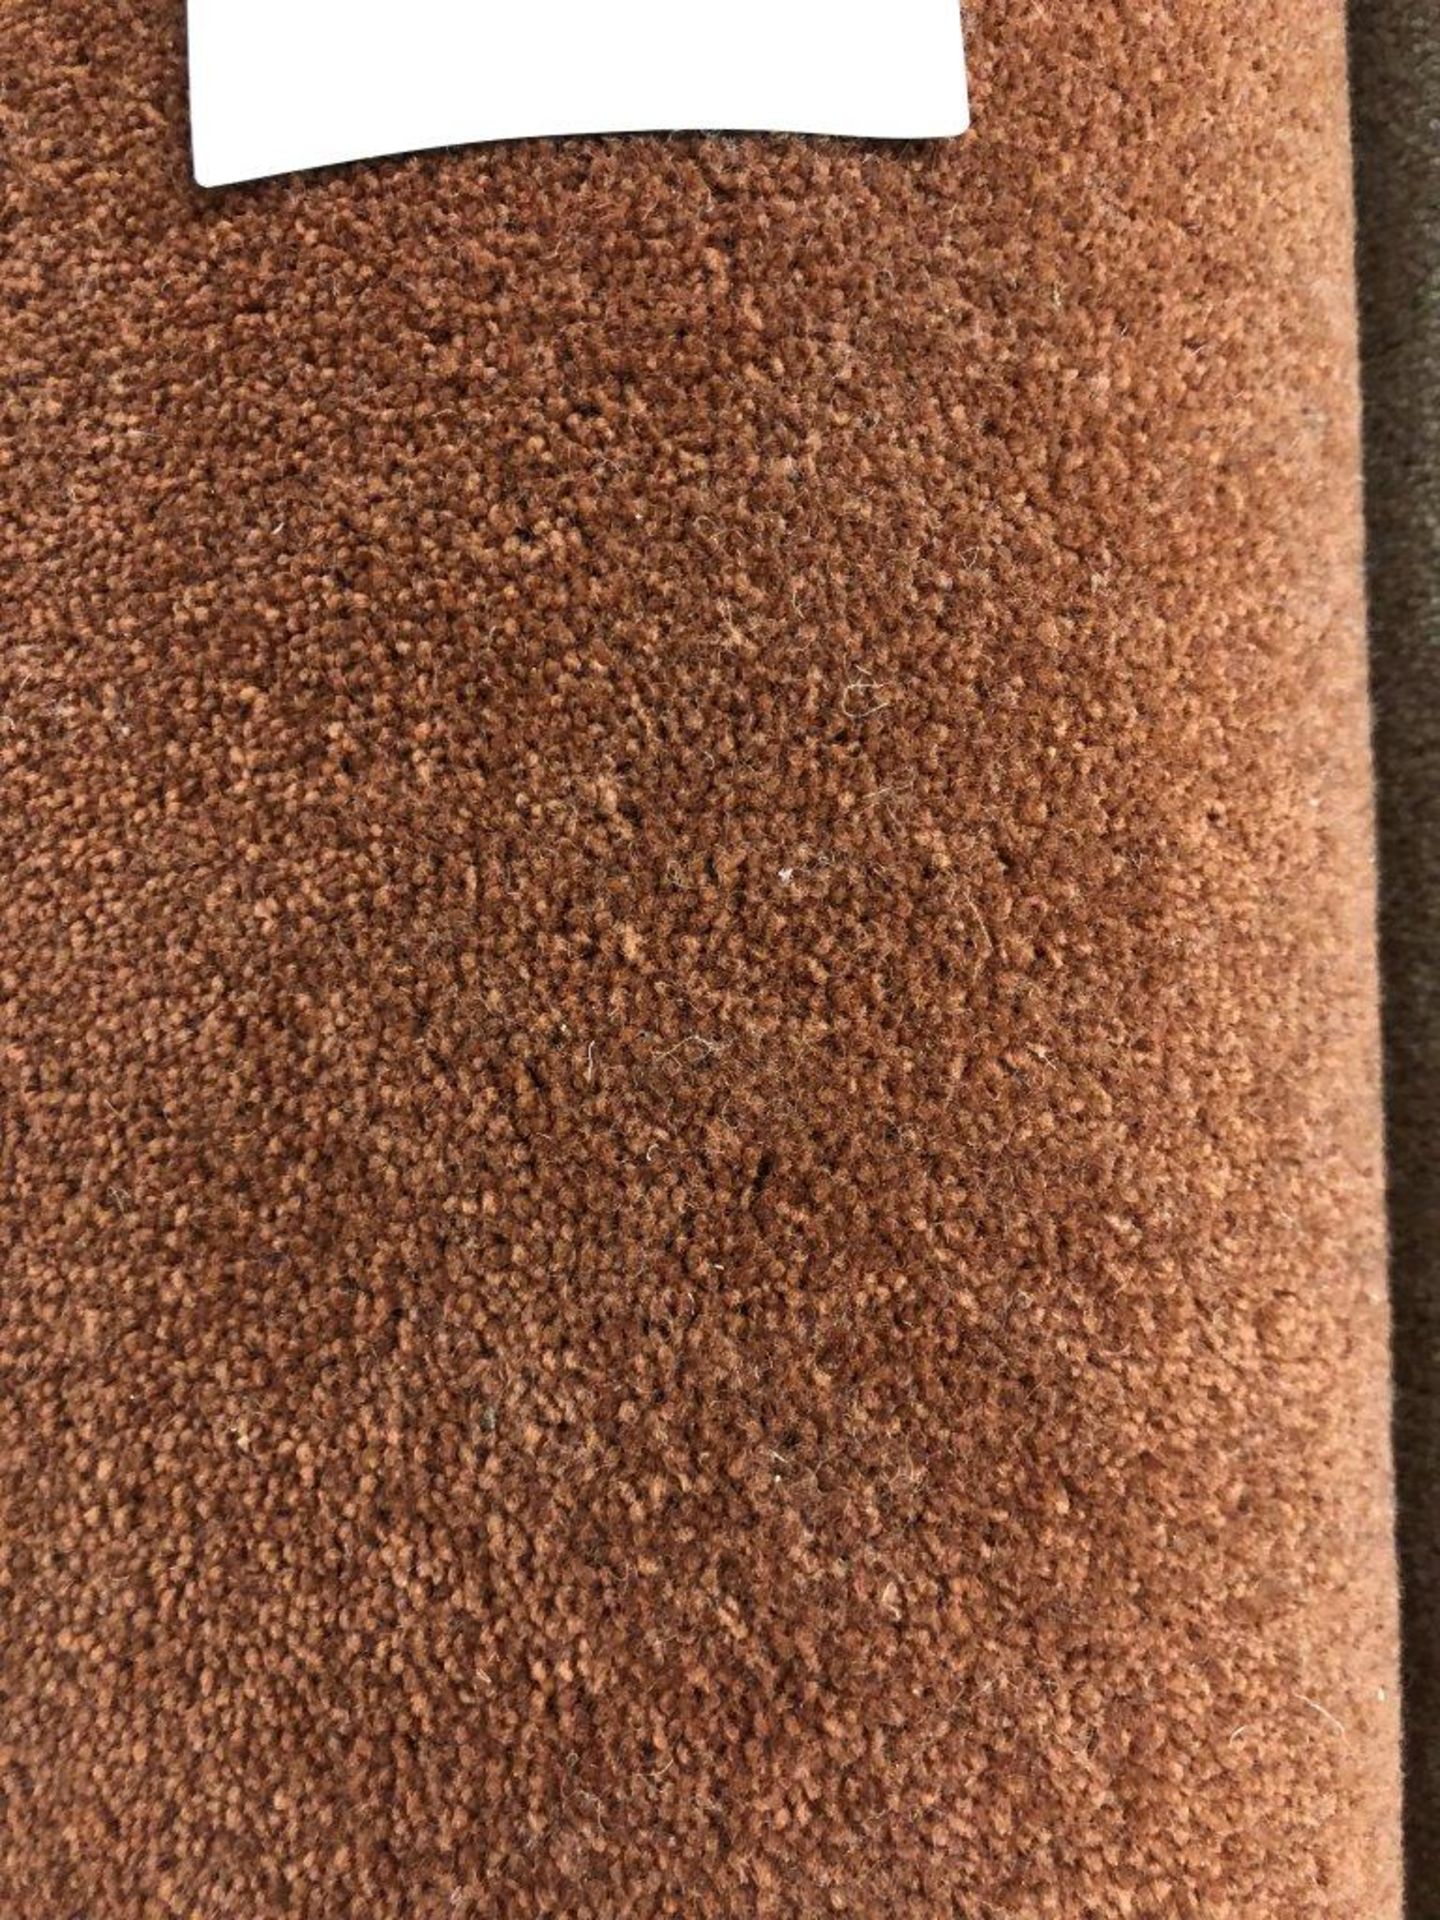 1 x Ryalux Carpet End Roll - Orange 4.5x4.0m2 - Image 3 of 3